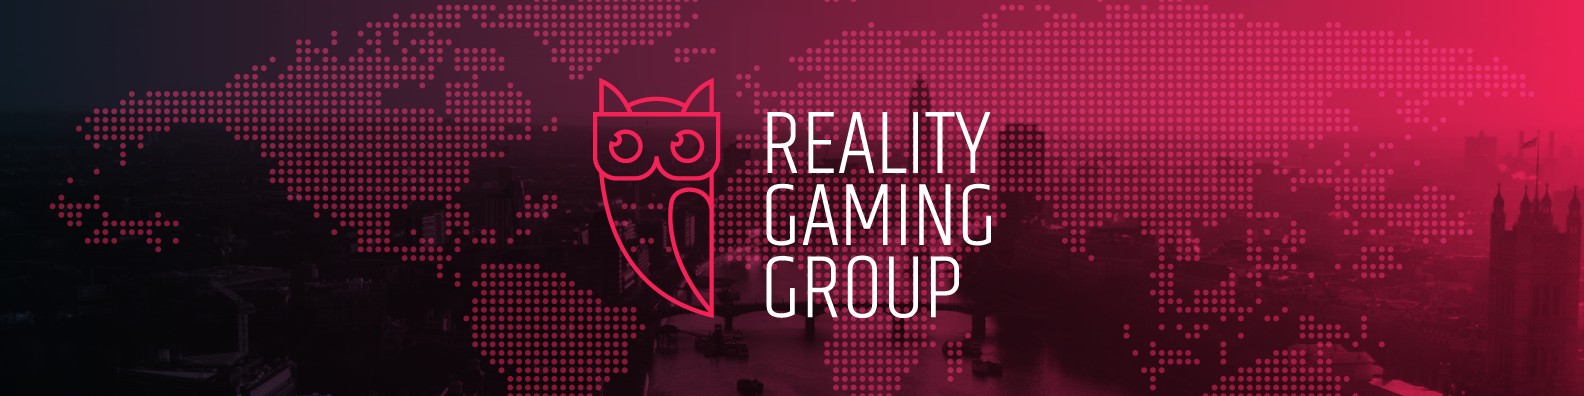 reality gaming group